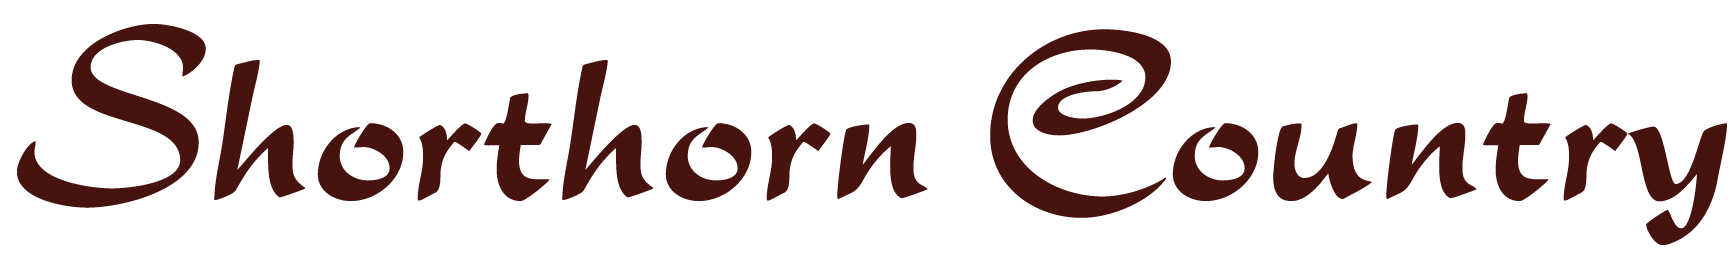 Shorthorn Country Logo